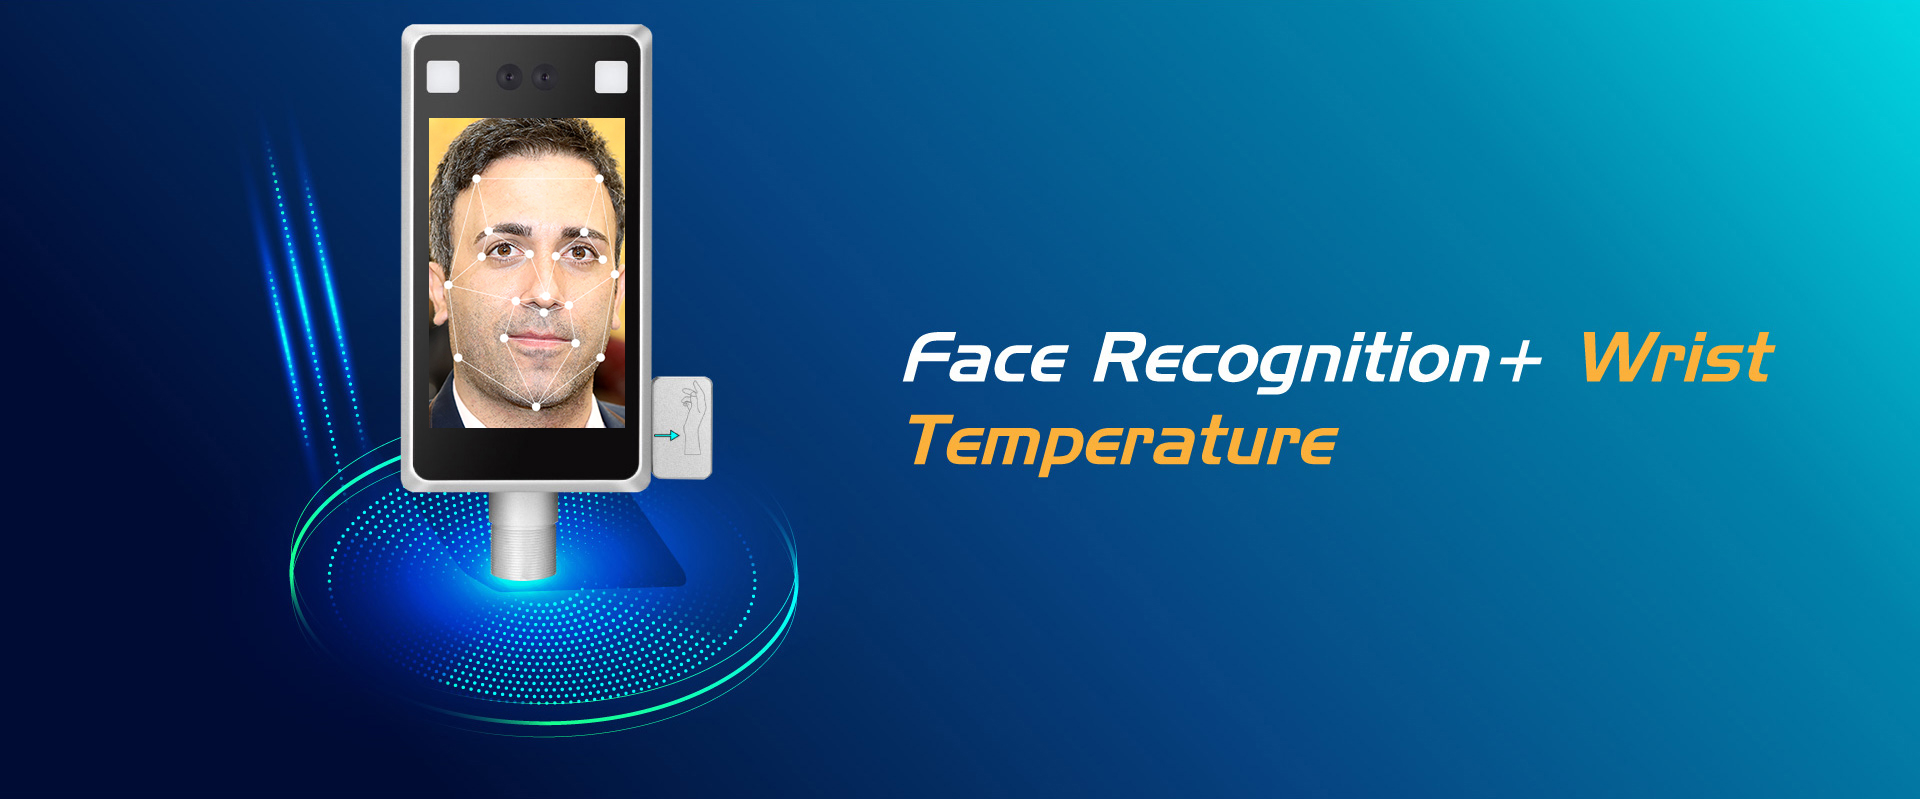 Face Recognition Wrist Temperature